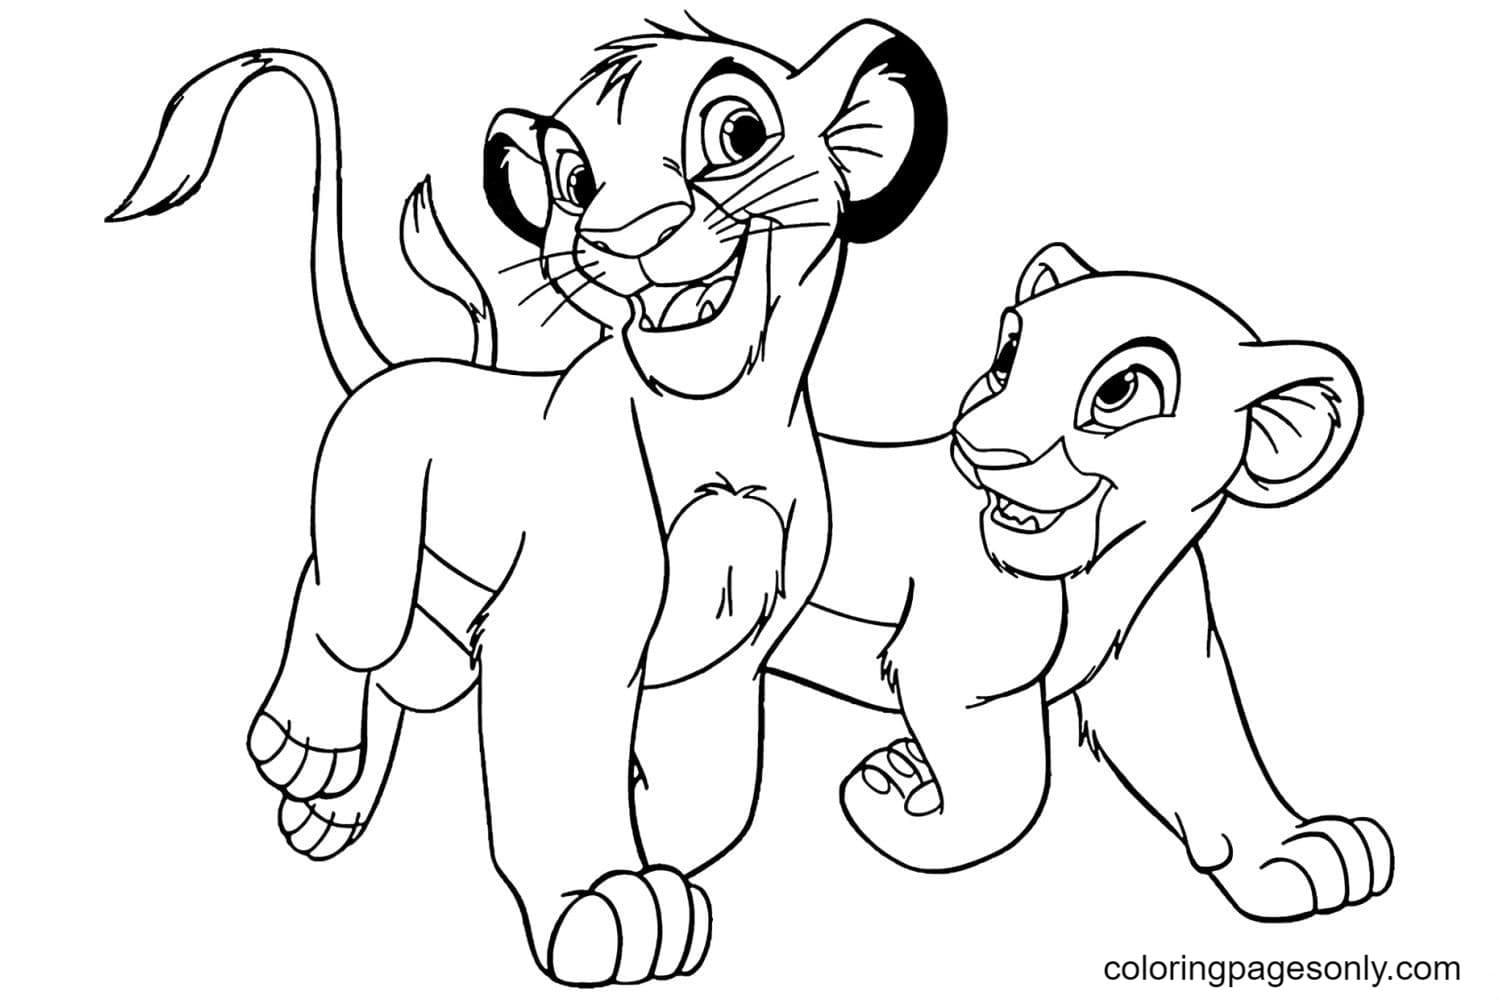 Simba And Nala from The Lion King